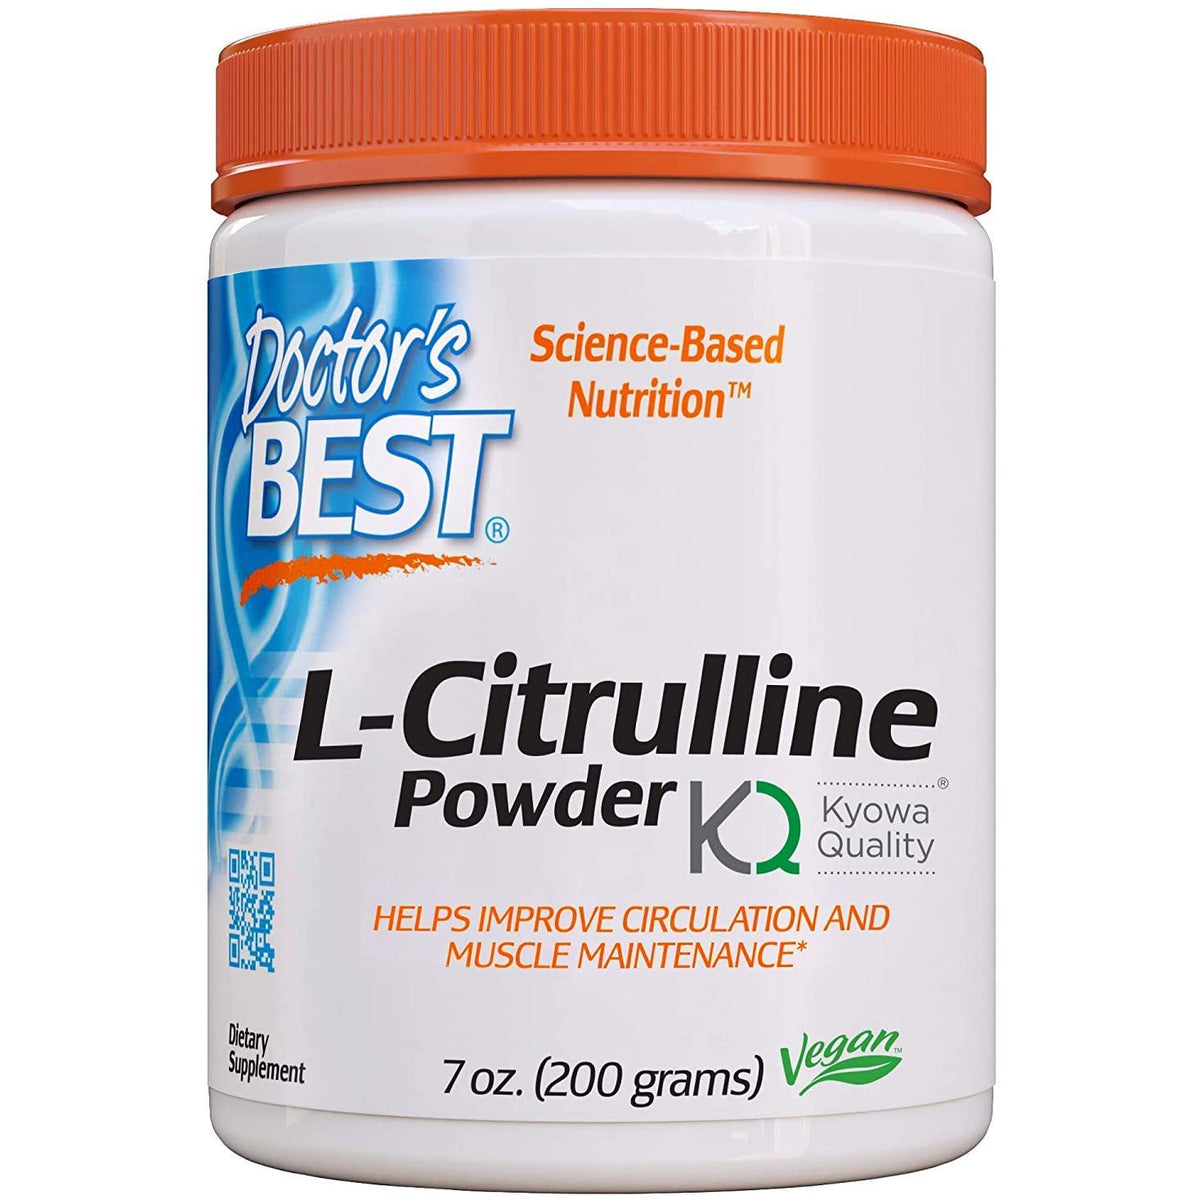 L-Citrulline Powder (200g) - Doctor's Best